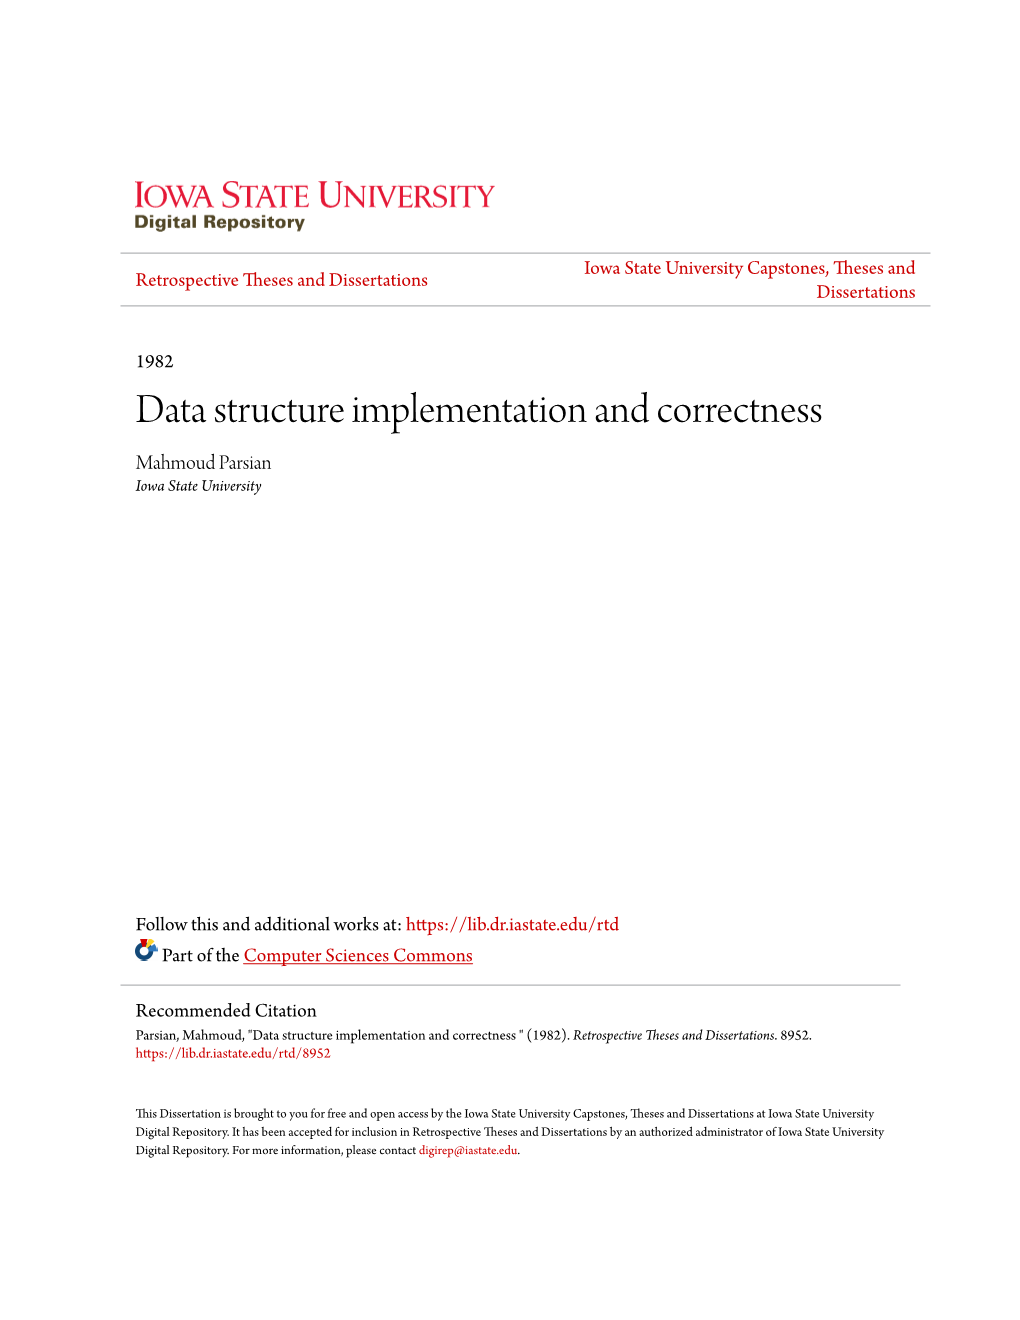 Data Structure Implementation and Correctness Mahmoud Parsian Iowa State University